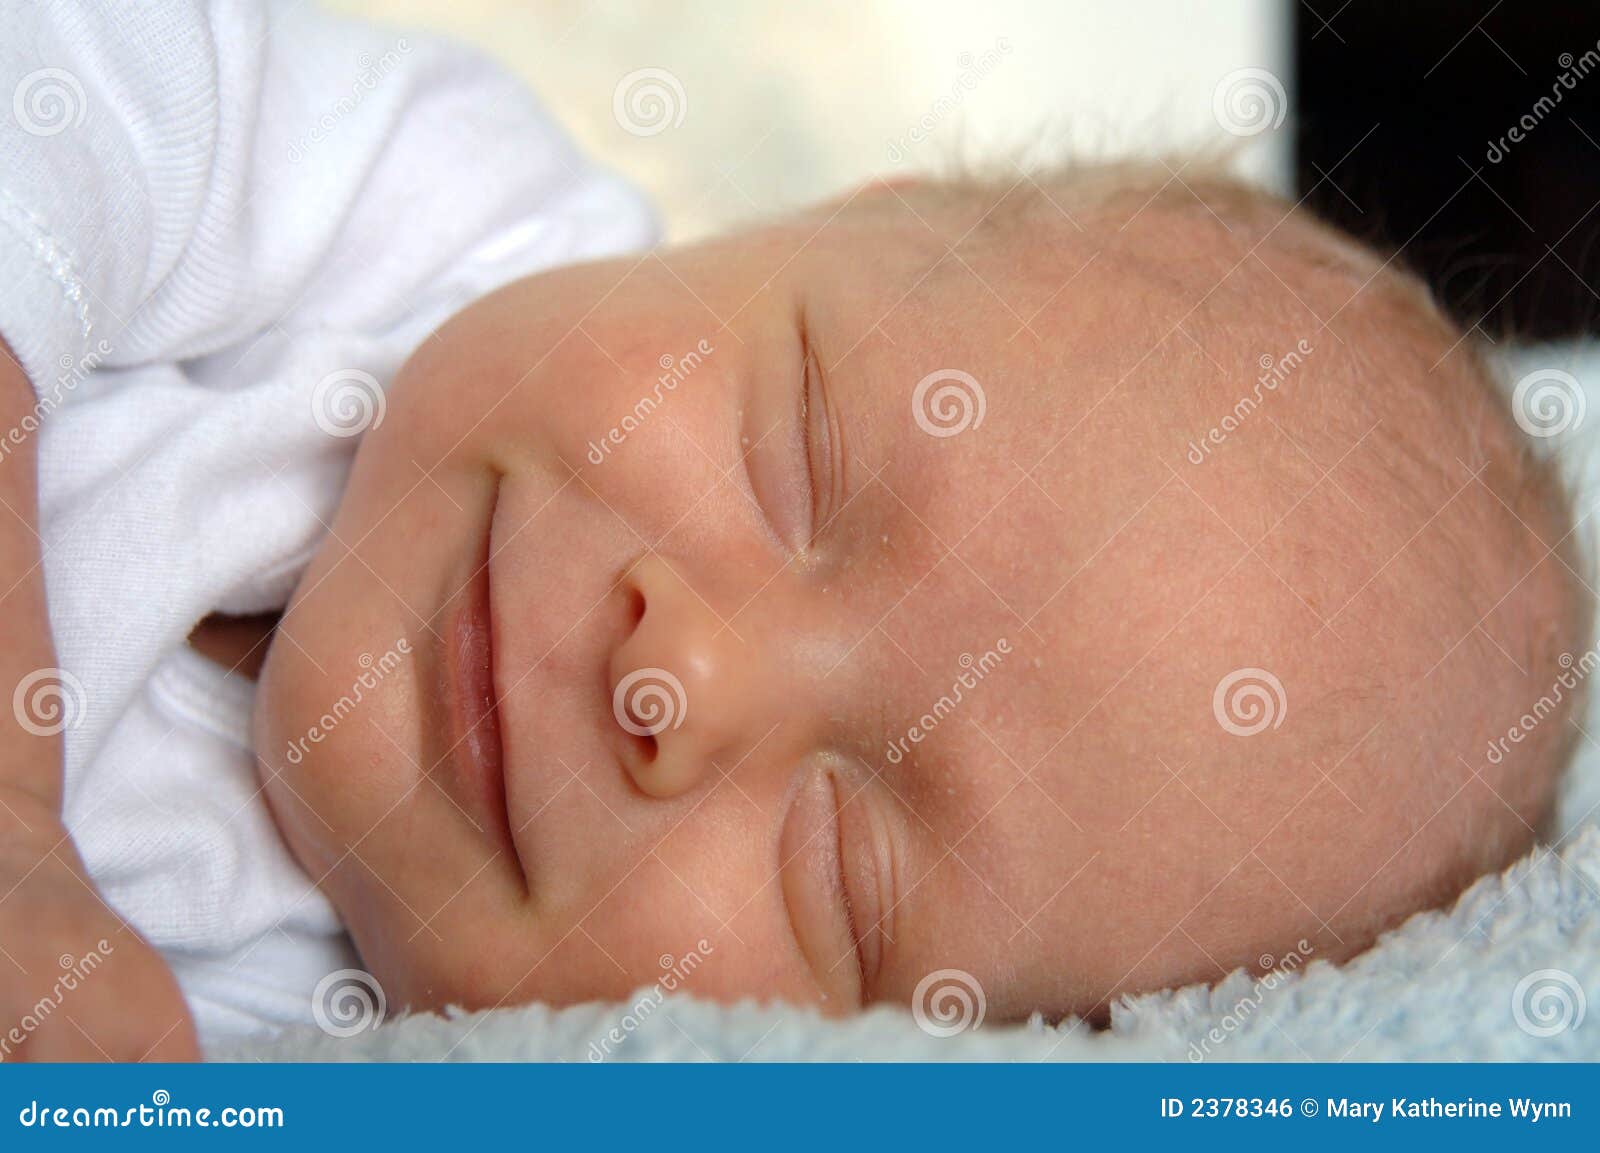 Newborn Baby Smile Royalty Free Stock Image - Image: 2378346